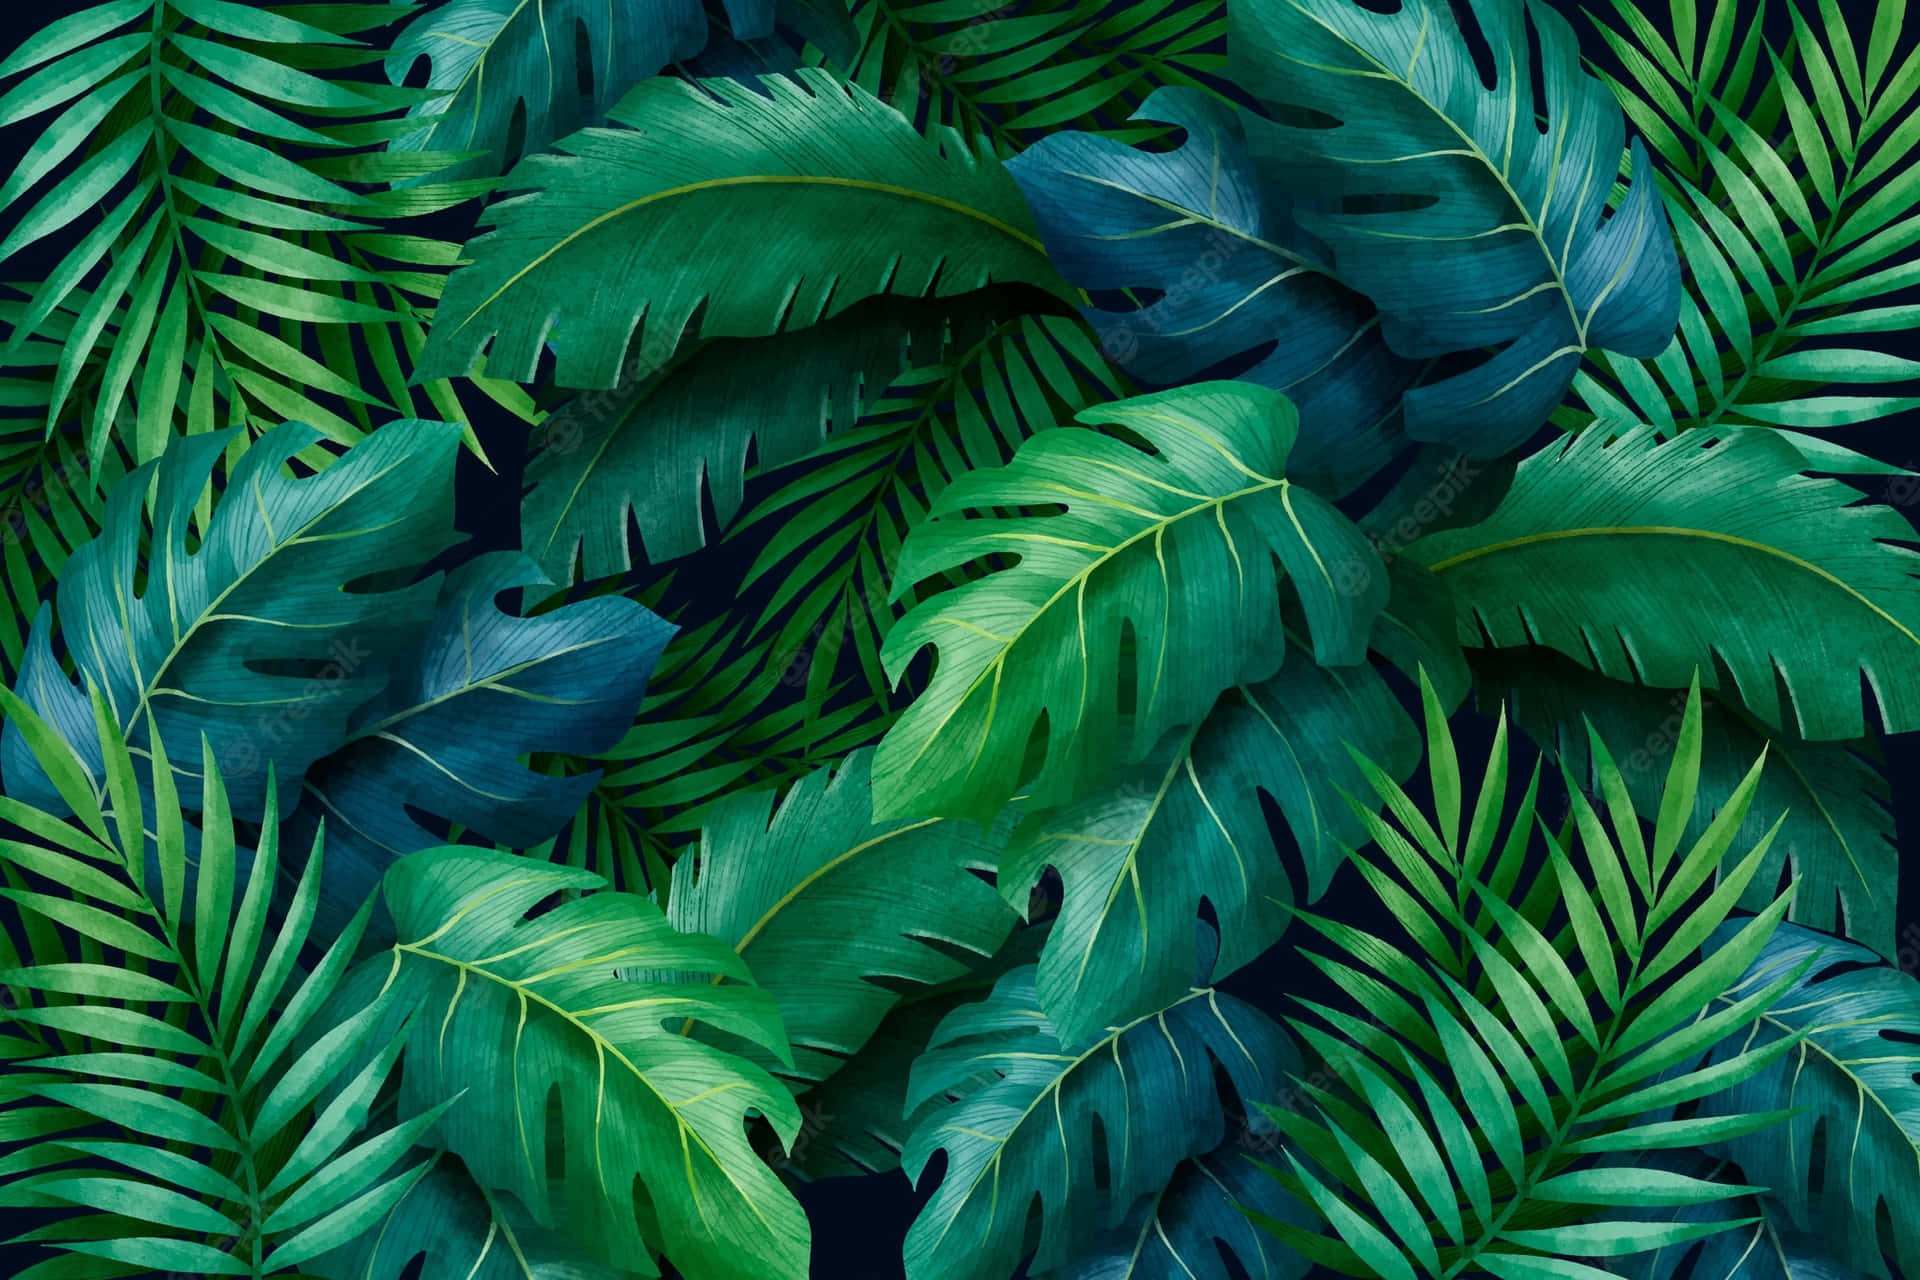 Tropical Leaves Wallpaper Images  Free Download on Freepik